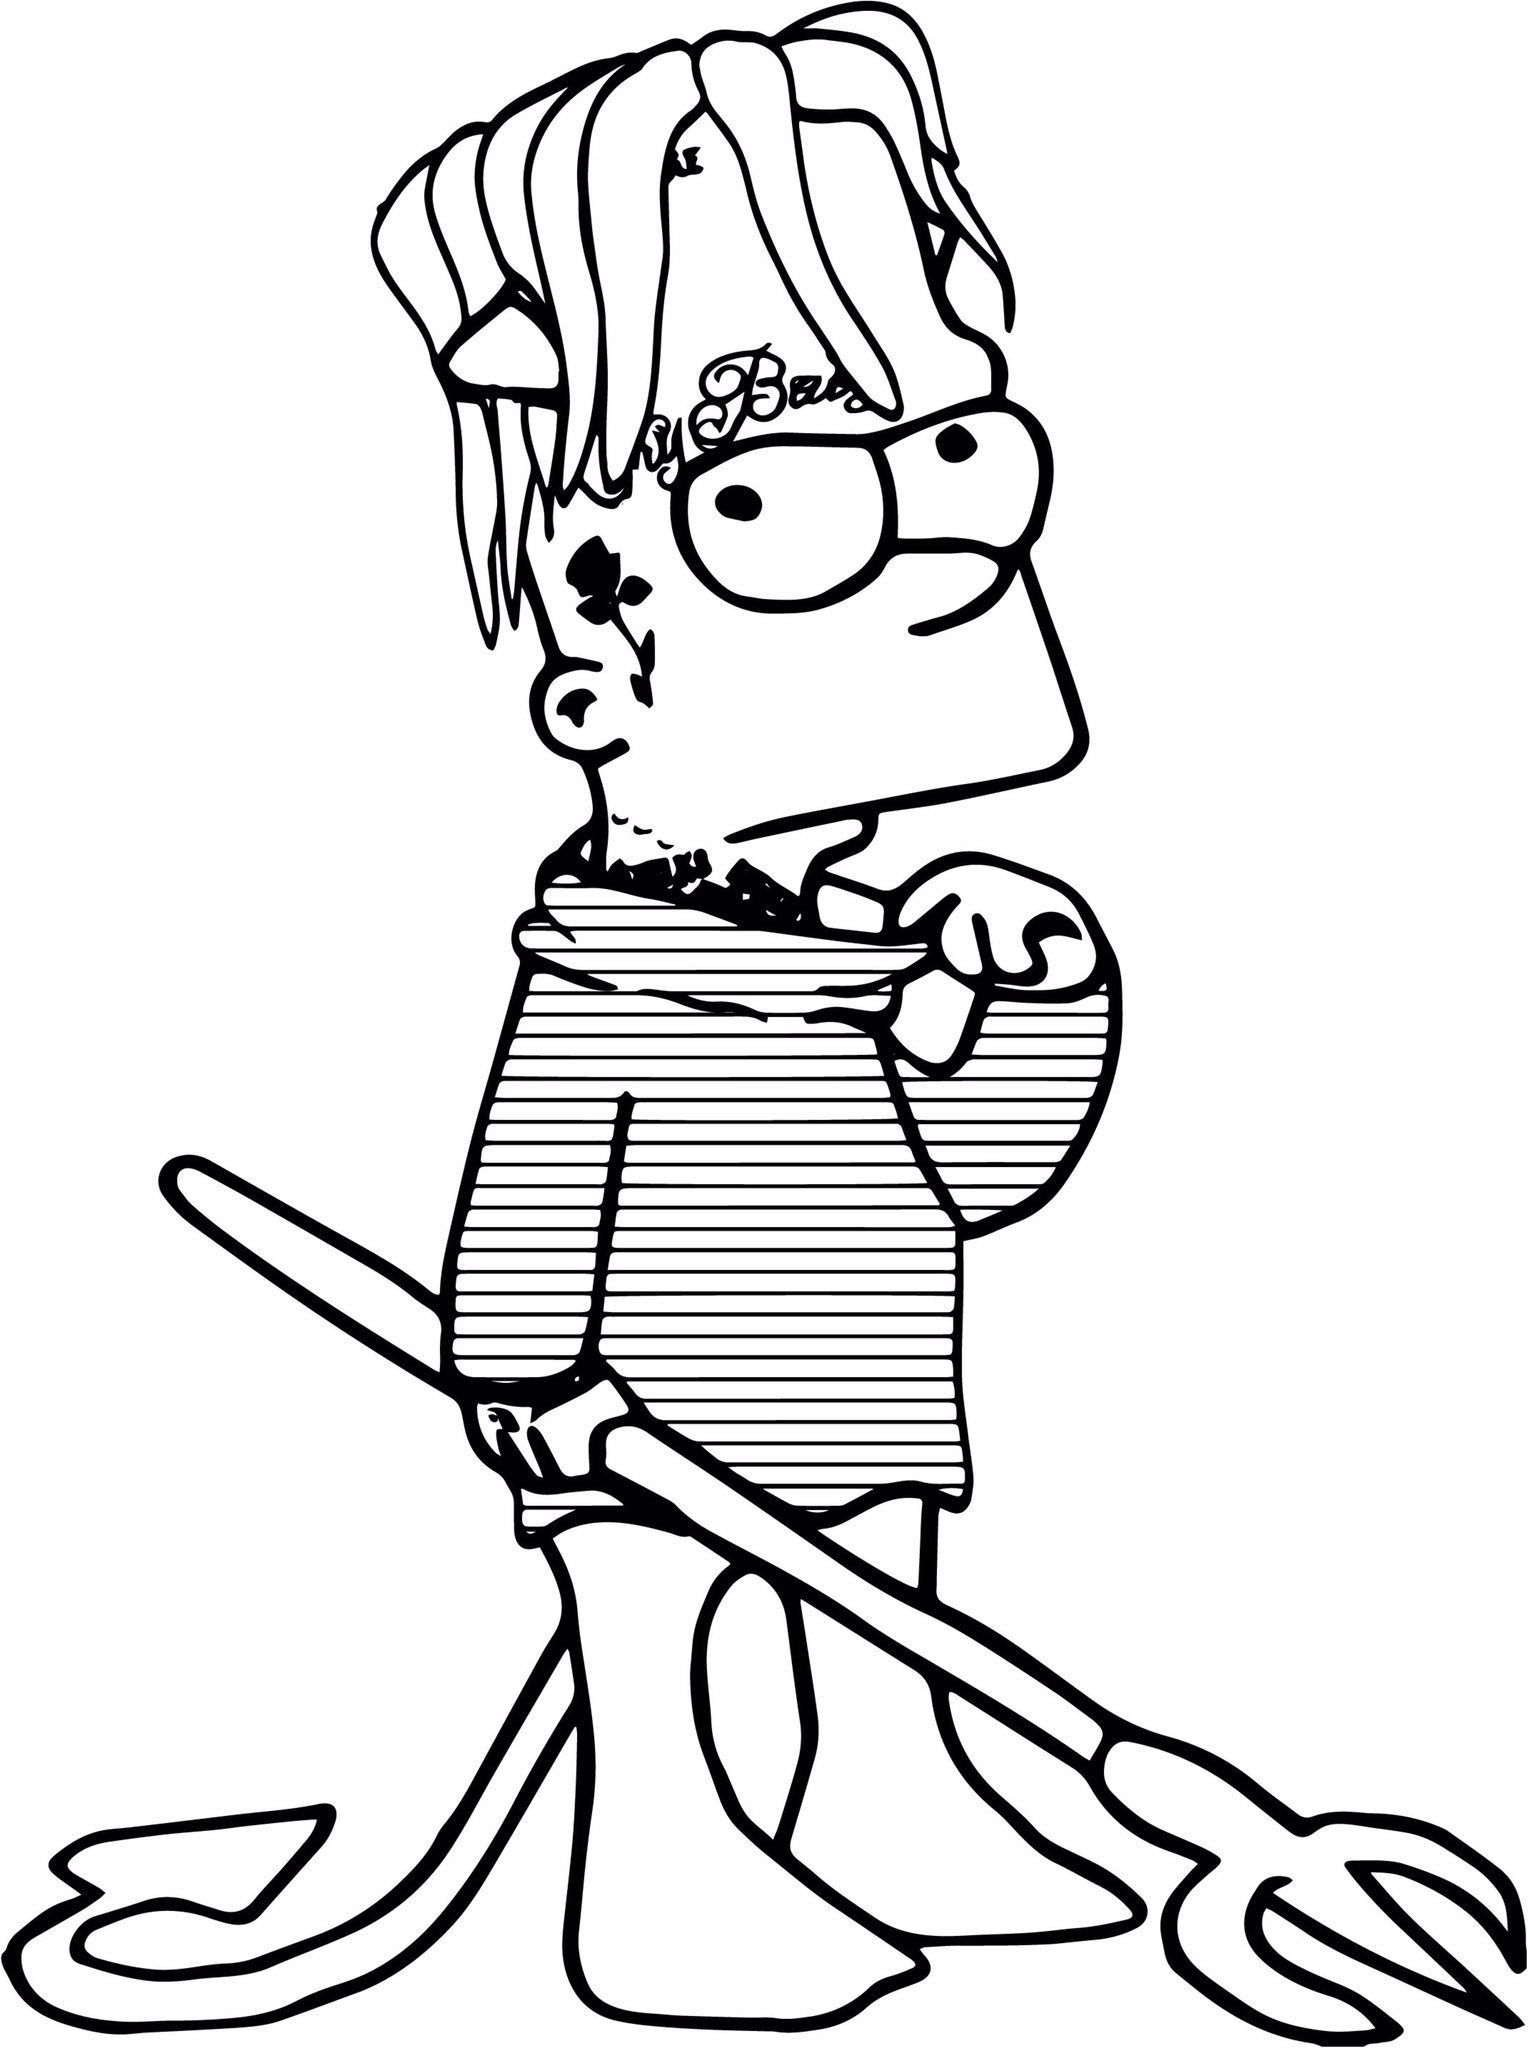 Lil Peep Hellboy Bart Simpson Coloring Page : ColoringSheet